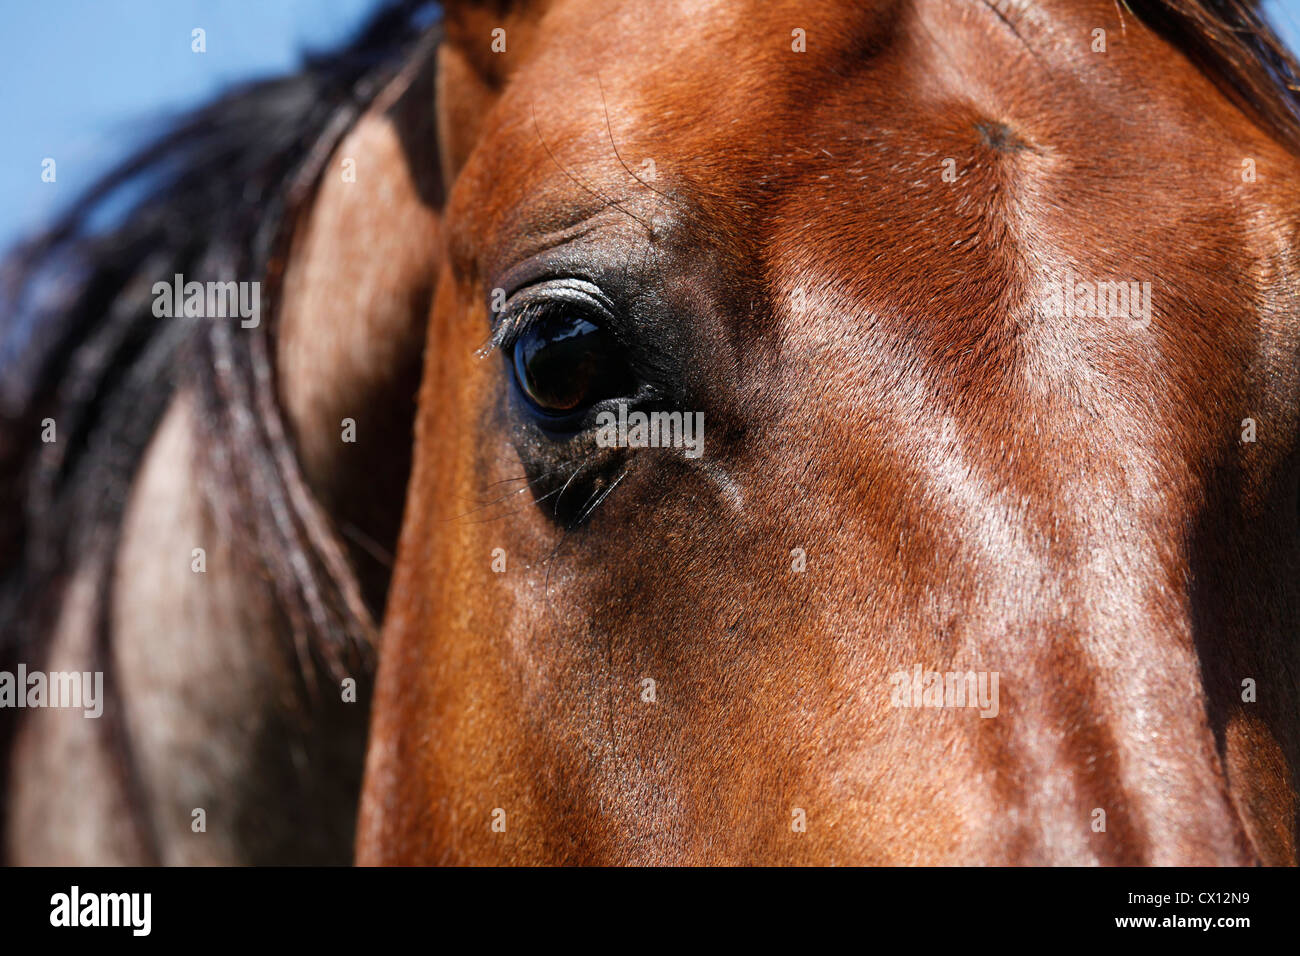 Quarter Horse eye Stock Photo